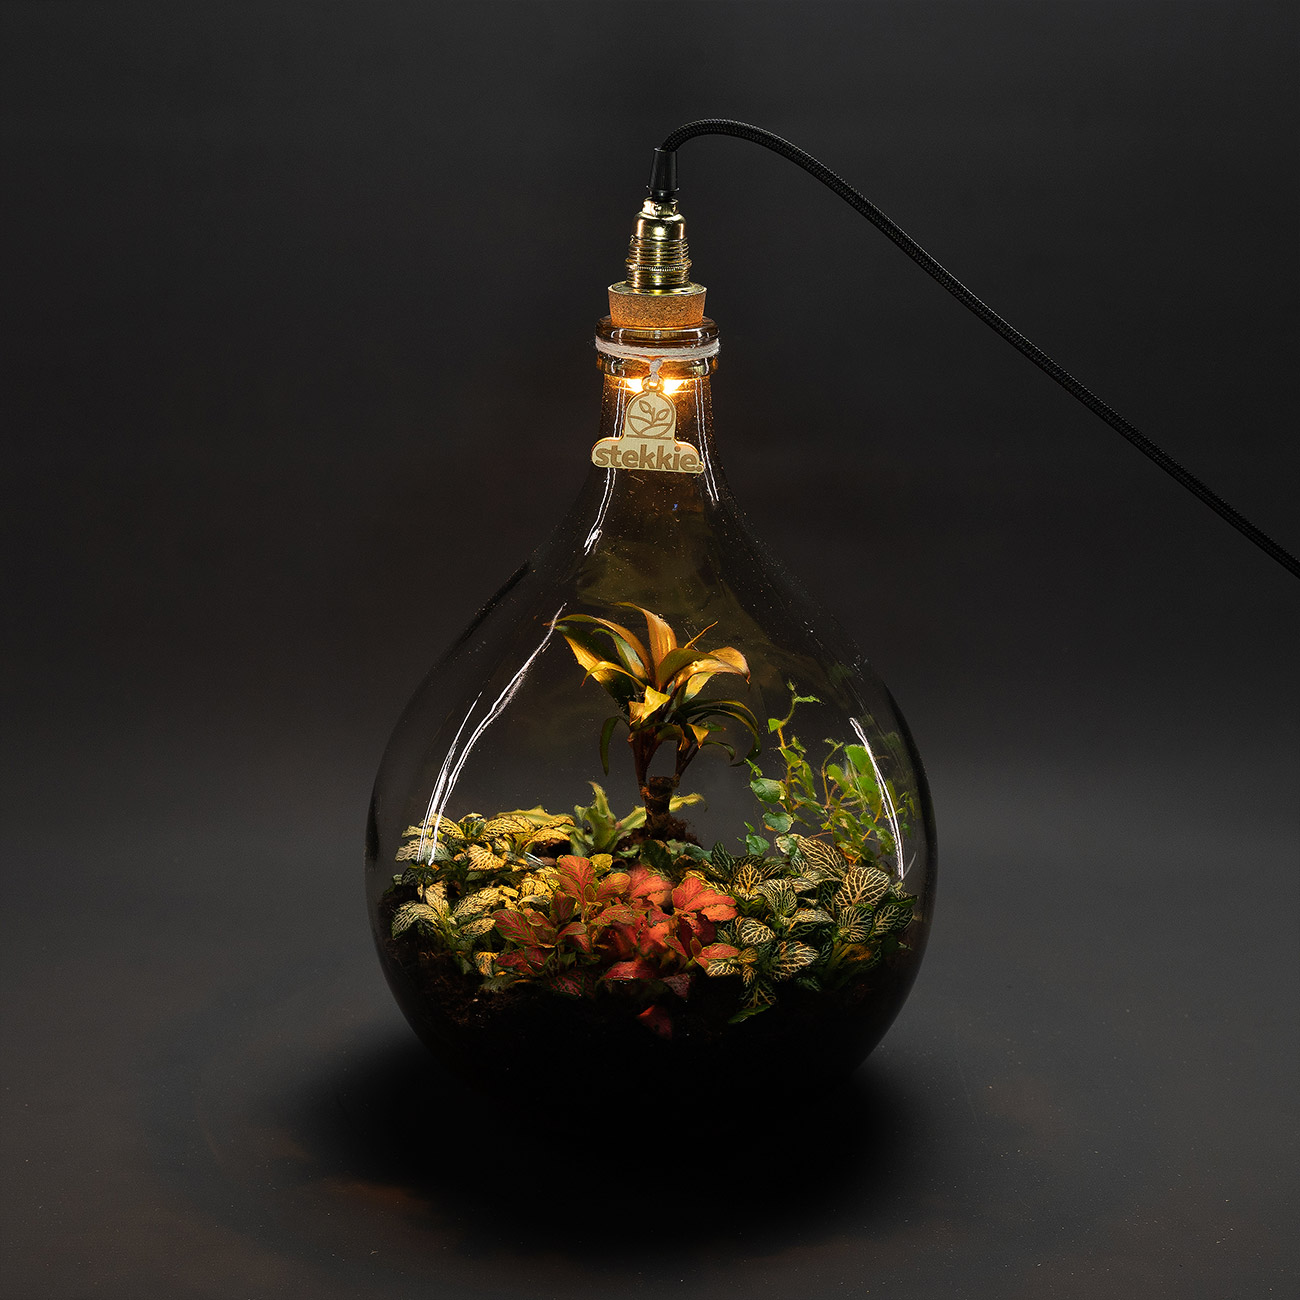 stekkie-medium-mini-ecosysteem-lamp-donker-1